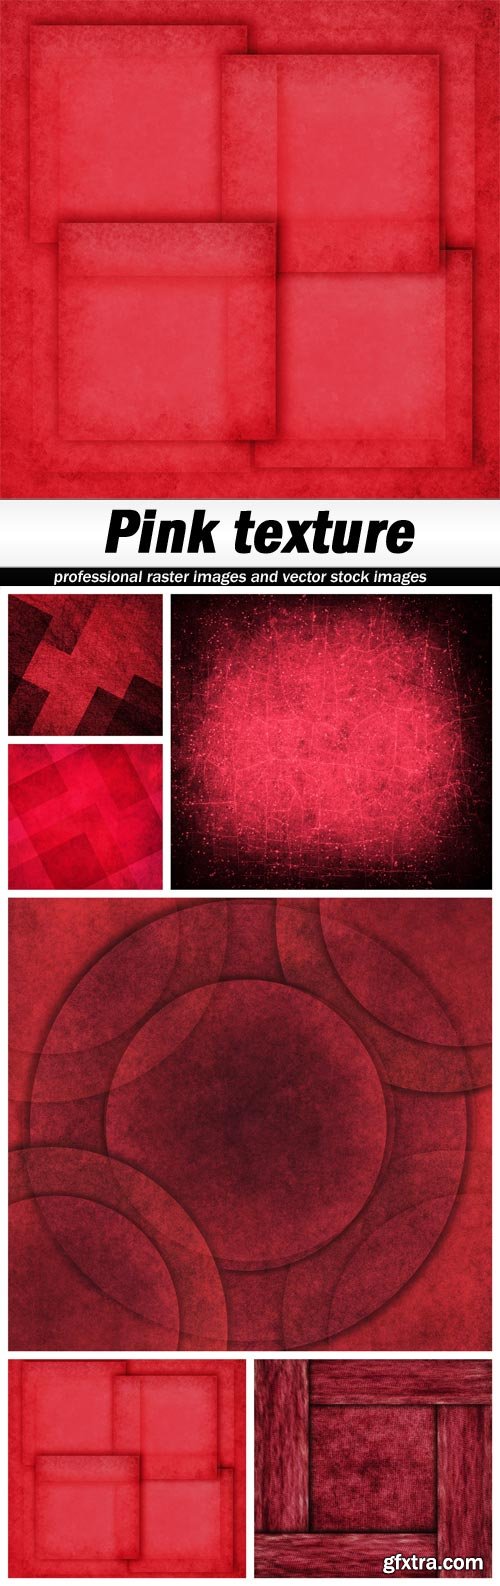 Pink texture - 6 UHQ JPEG